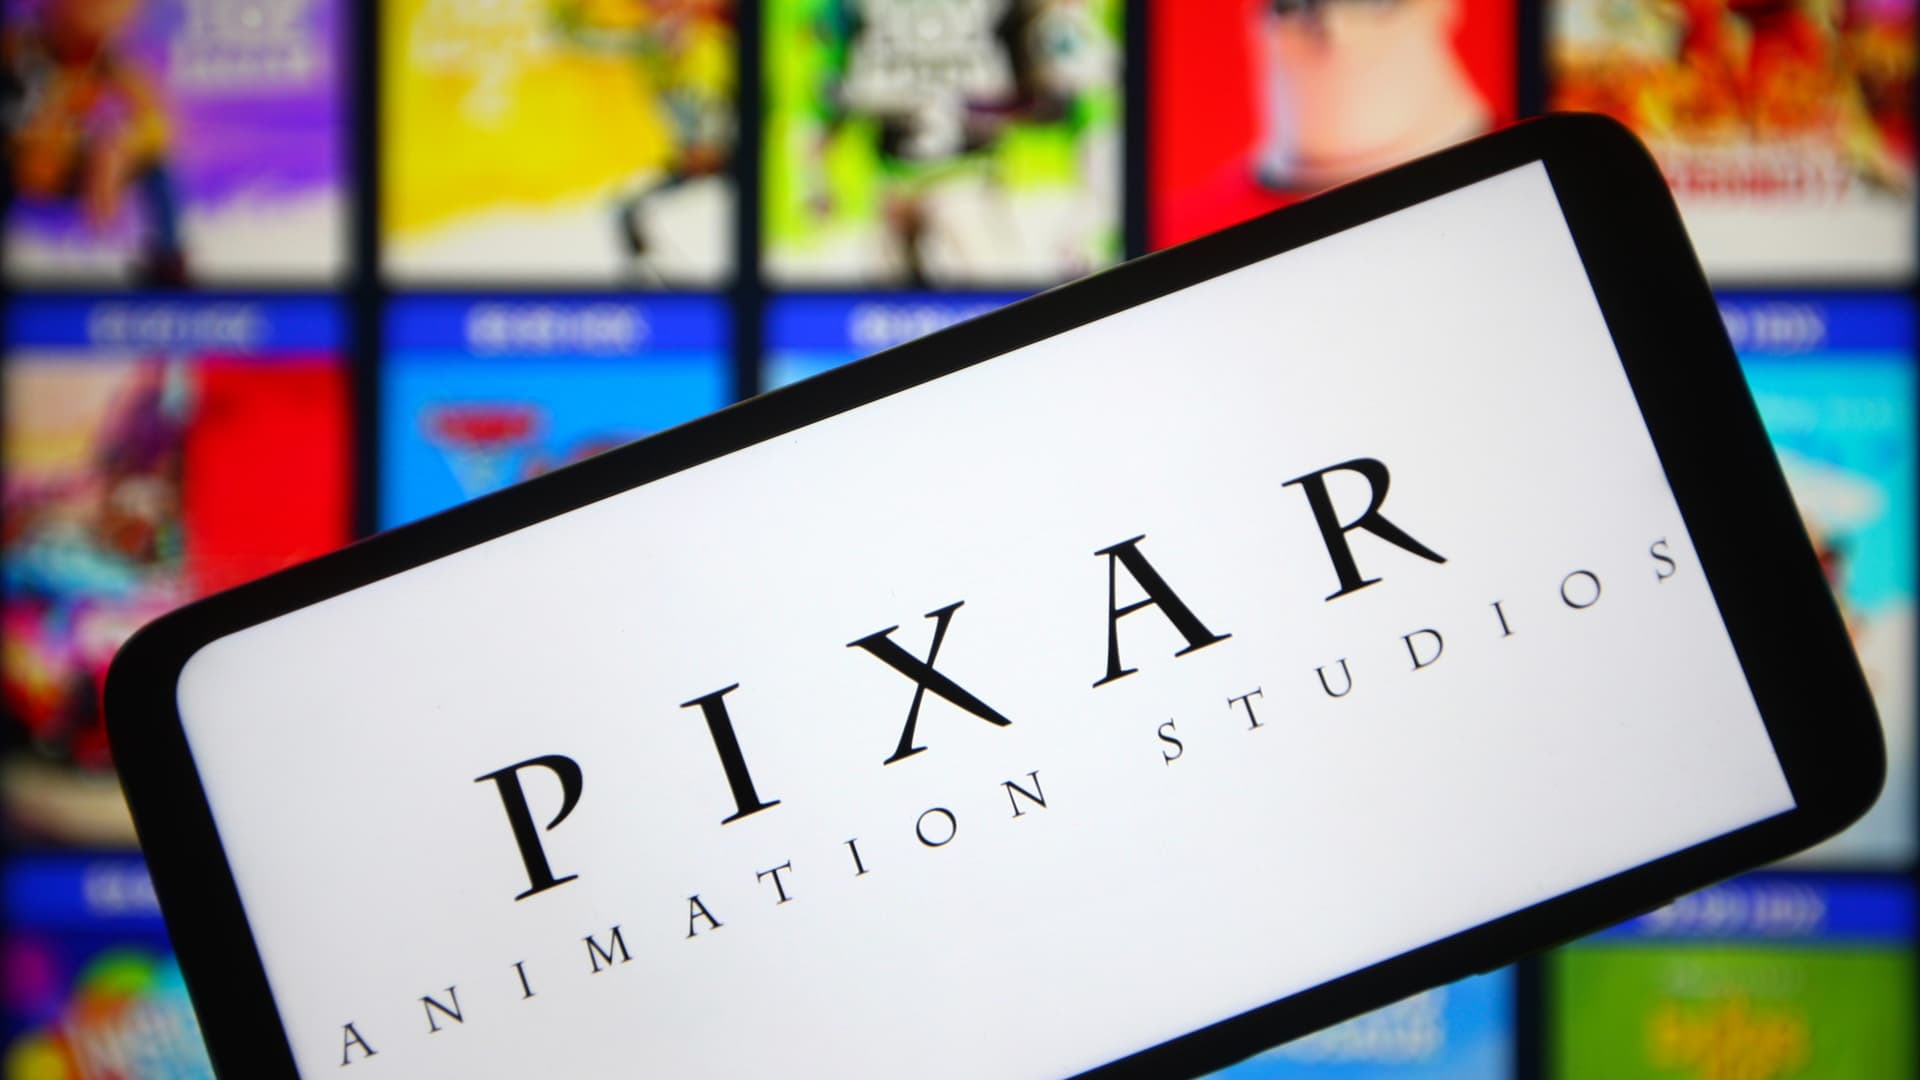 walt-disney’s-pixar-targets-‘lightyear’-execs-among-75-job-cuts